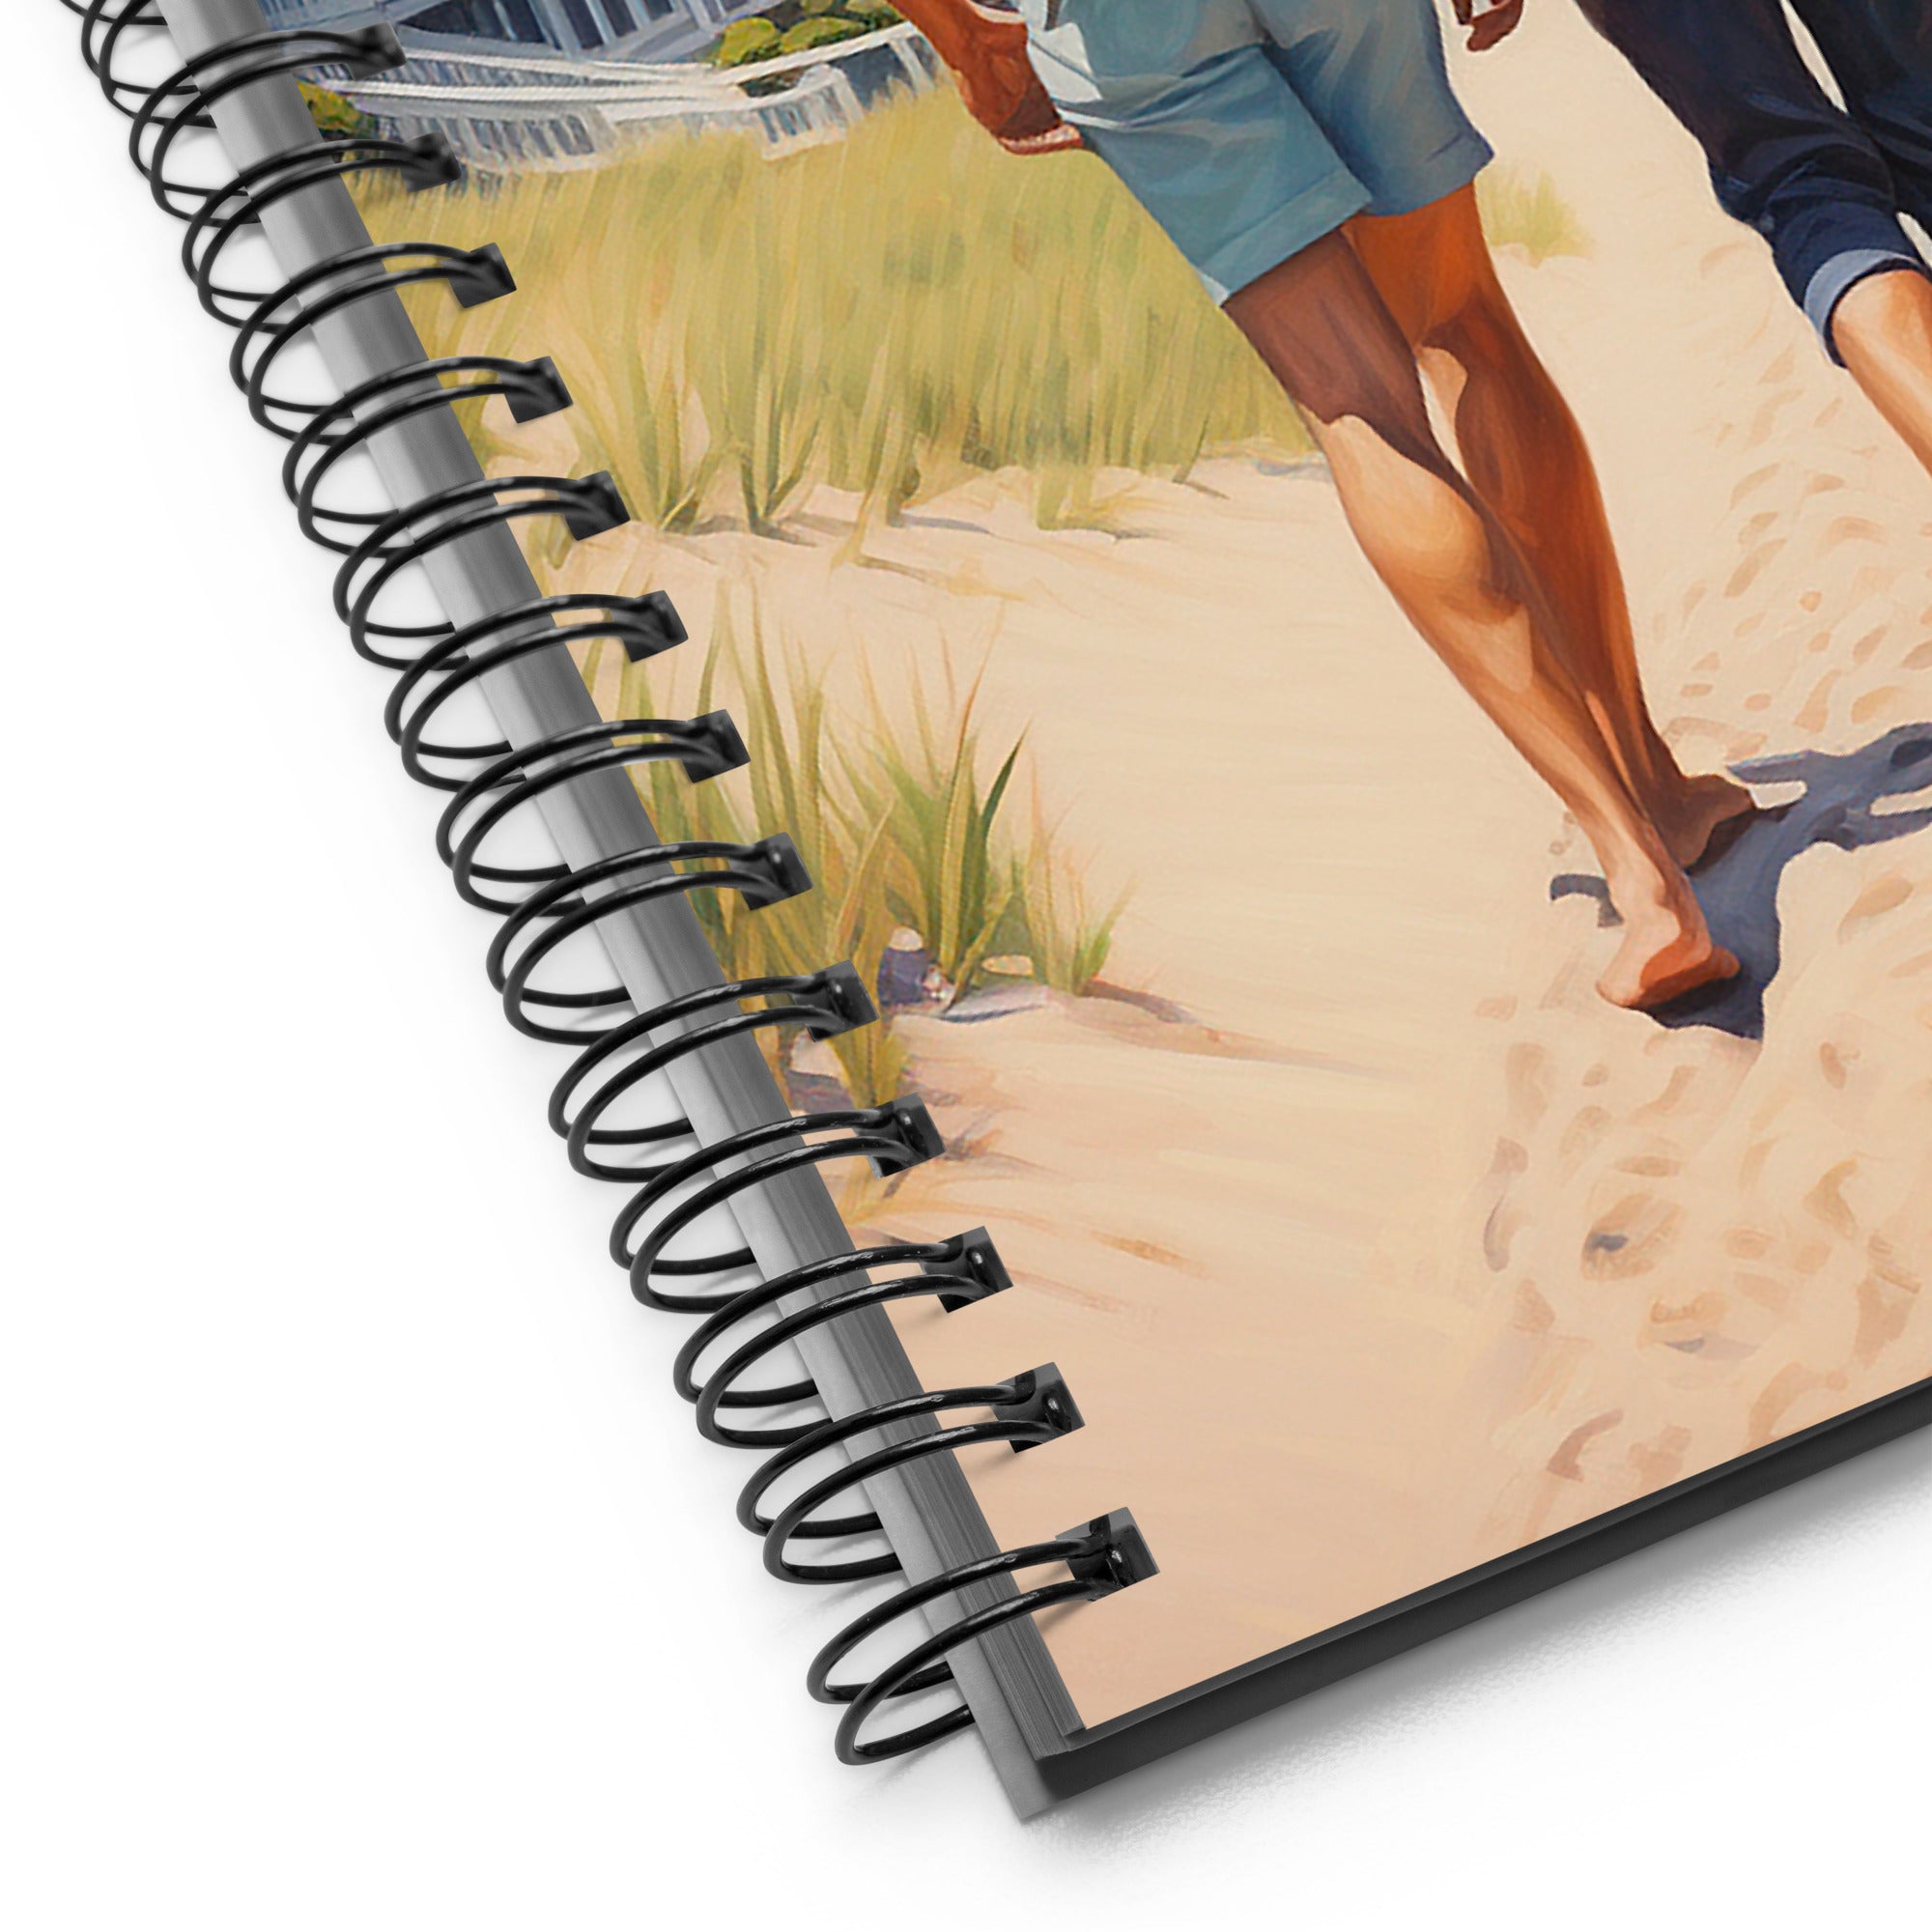 Spiral Notebook - Sunny Stroll by the Beach | Drese Art